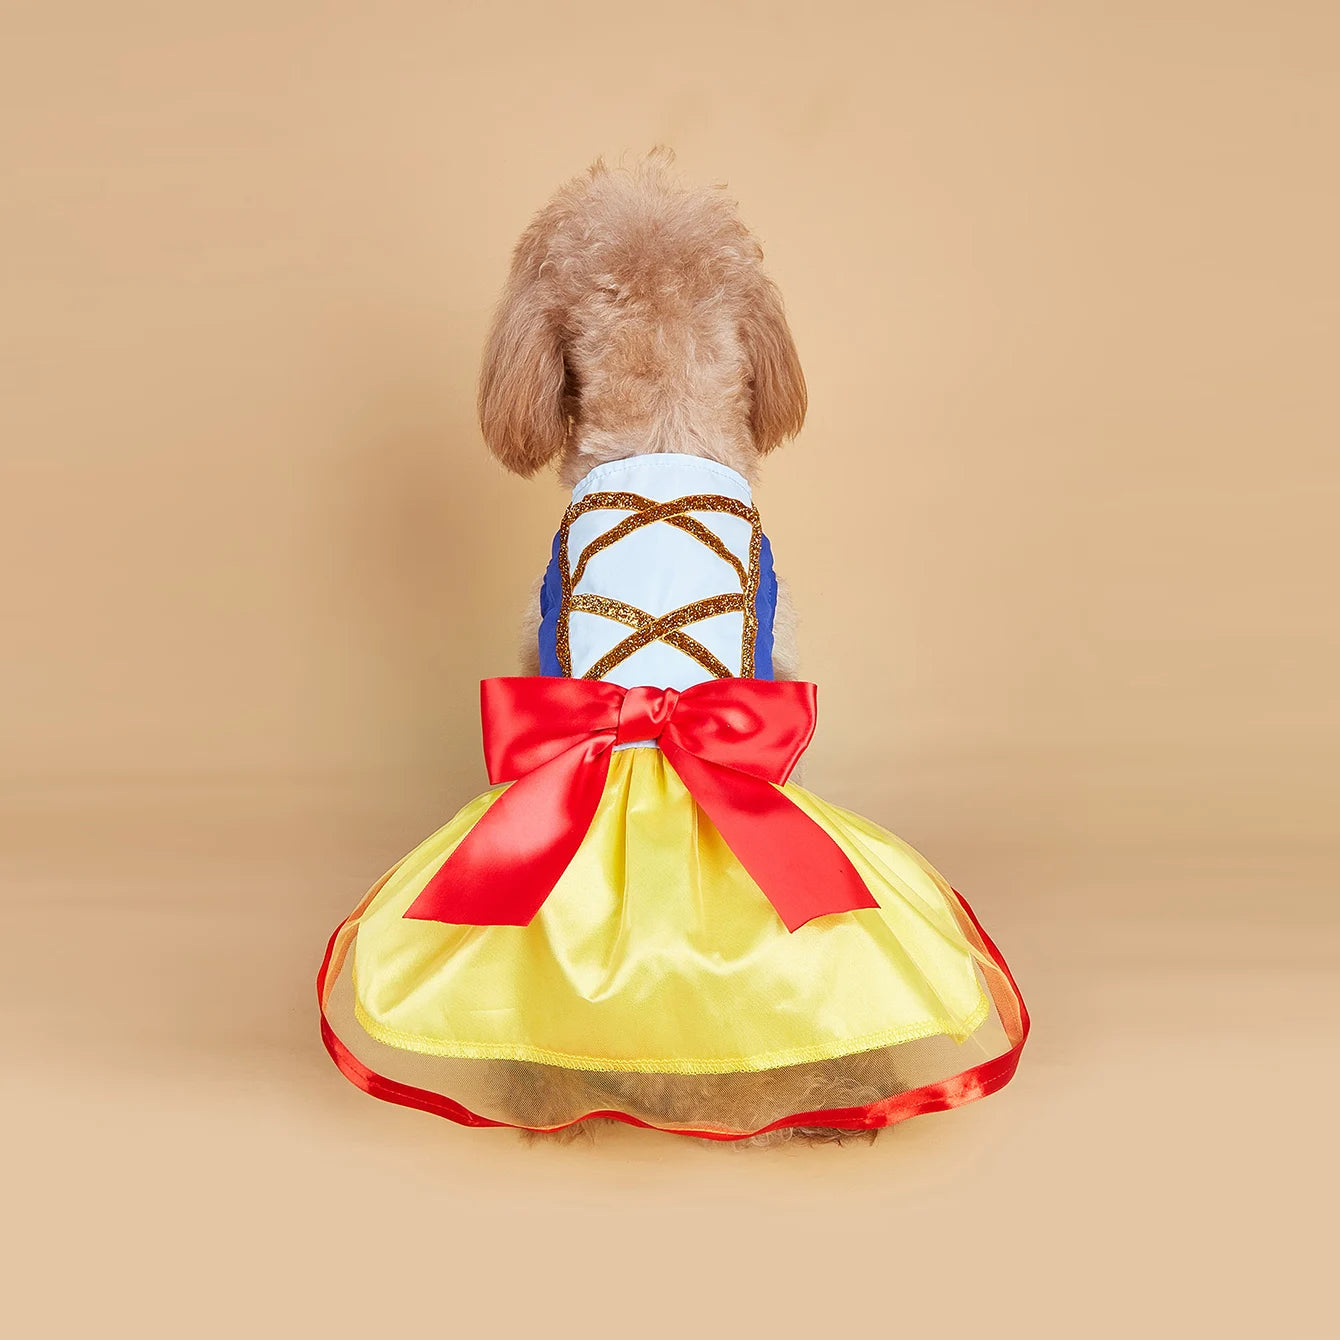 Snow White Dog Costume